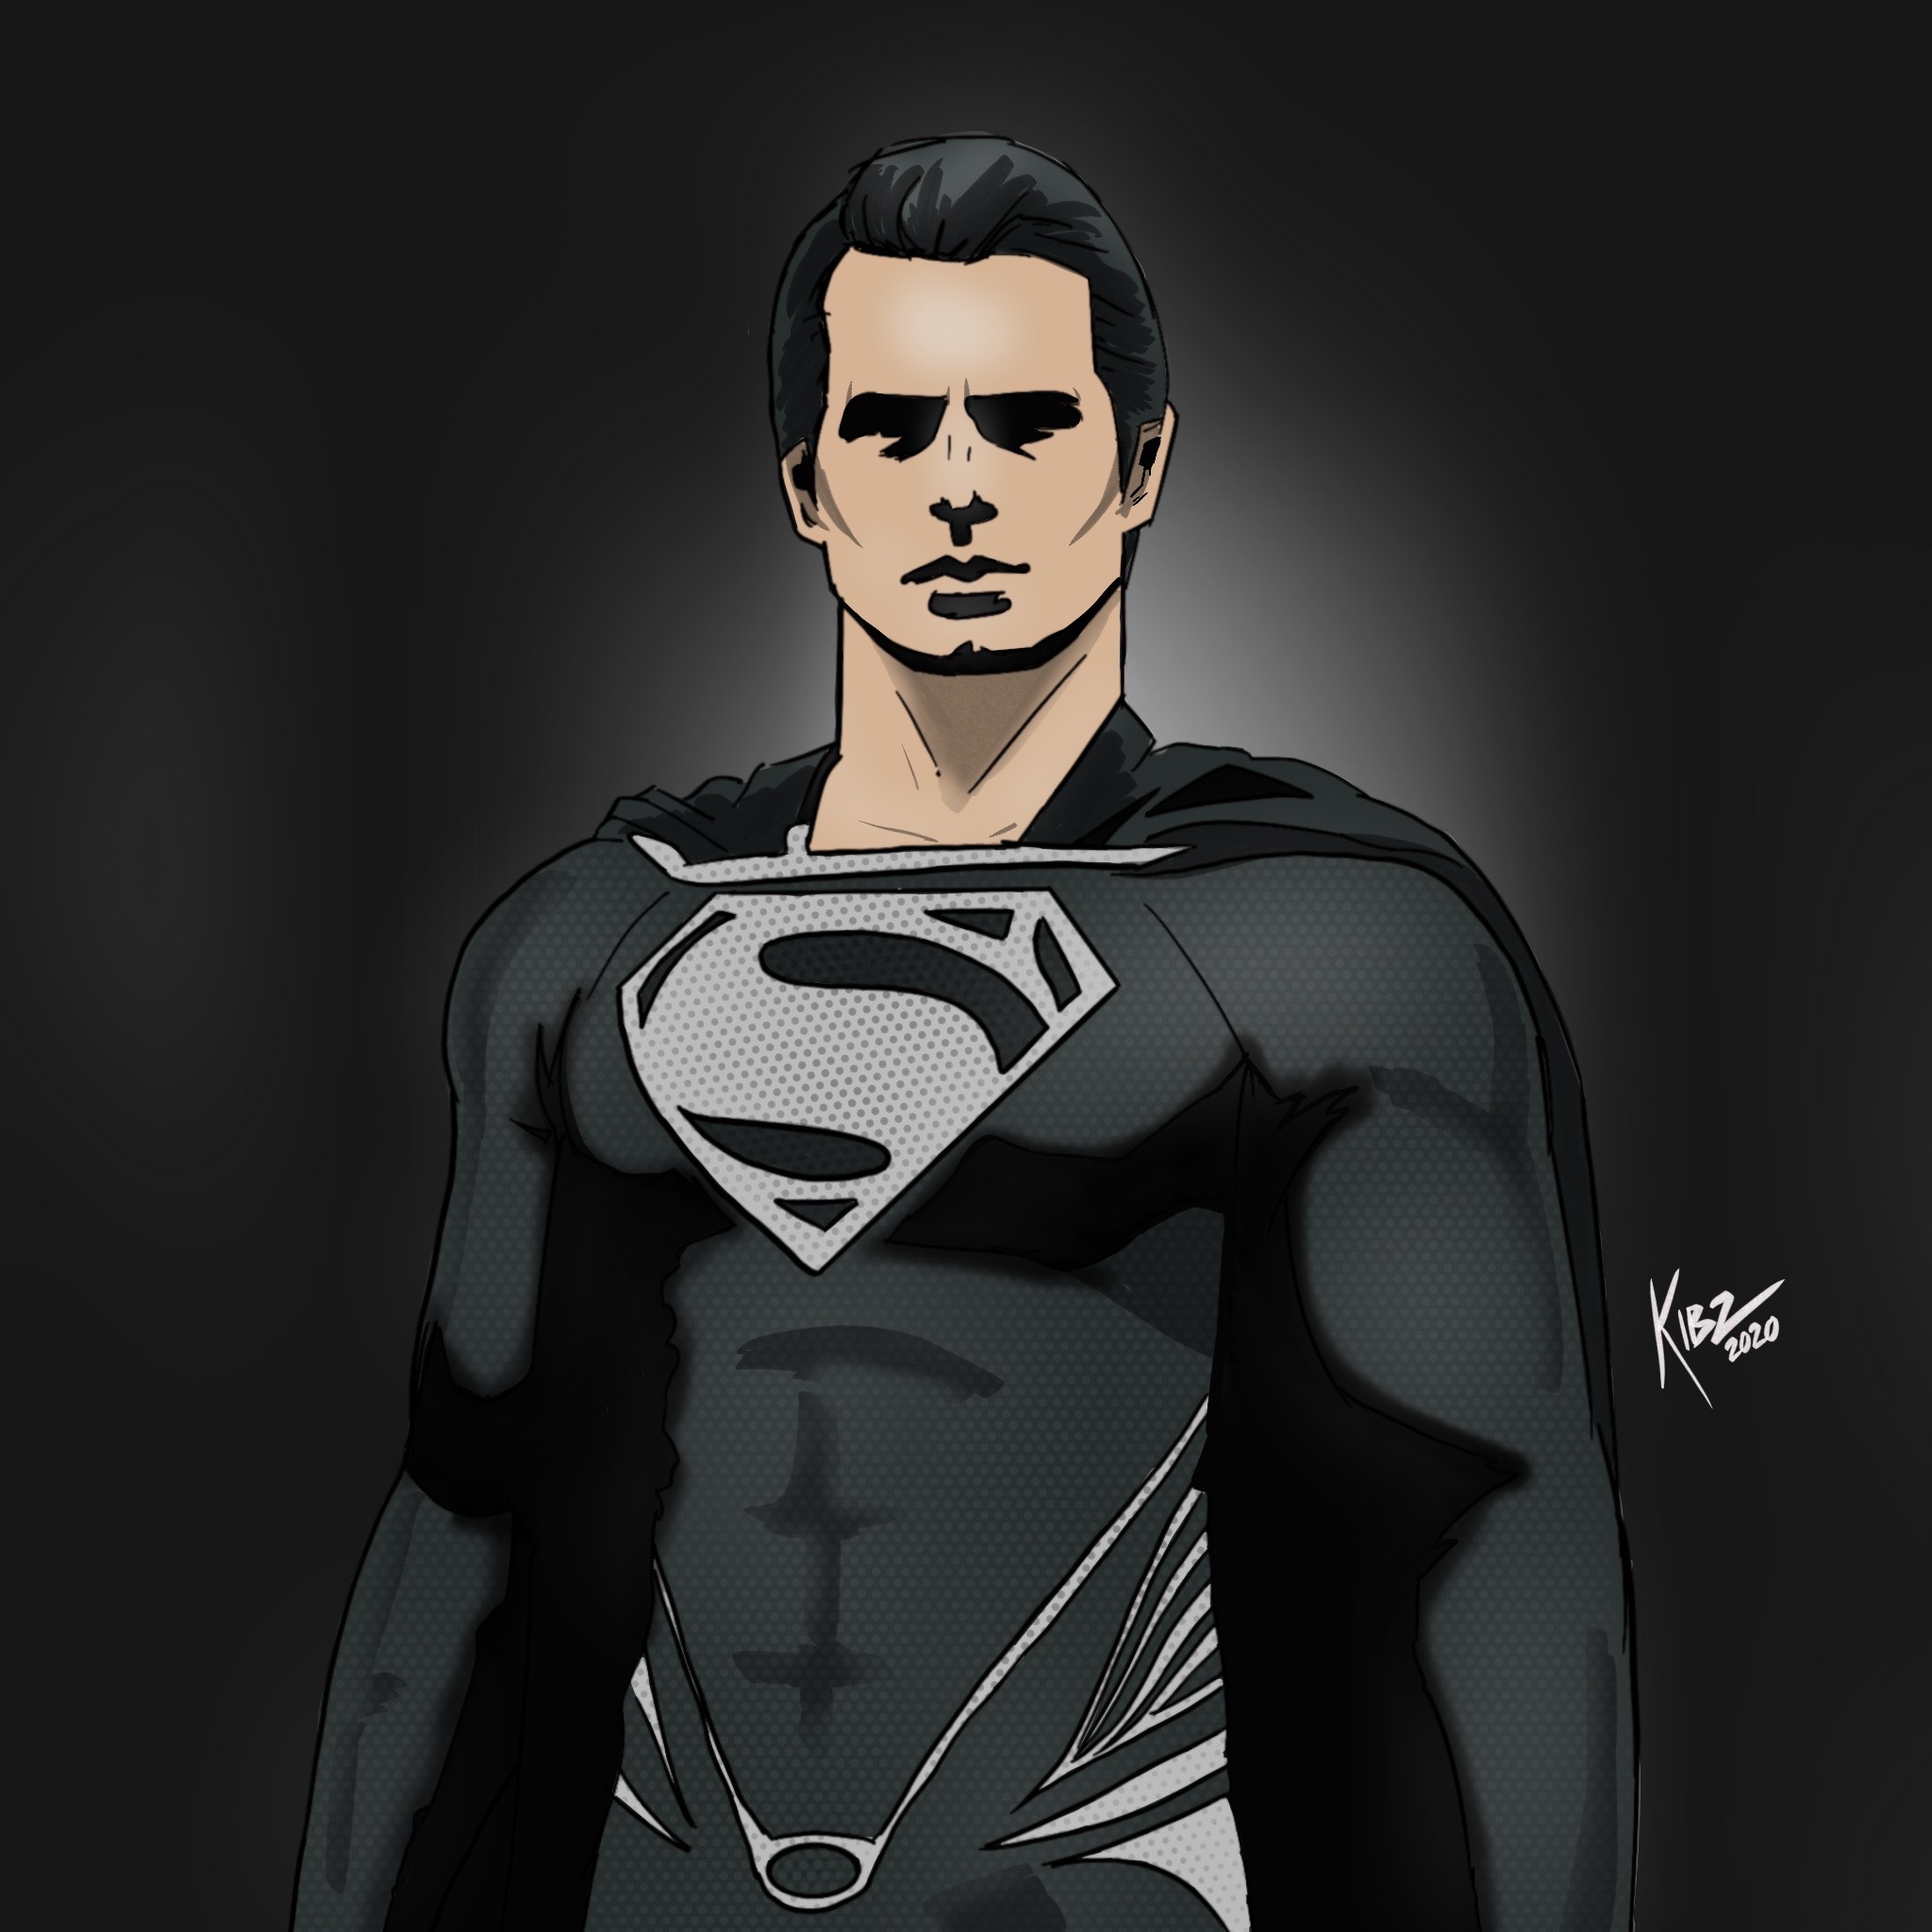 Black Suit Superman by kiblaahmedart on DeviantArt